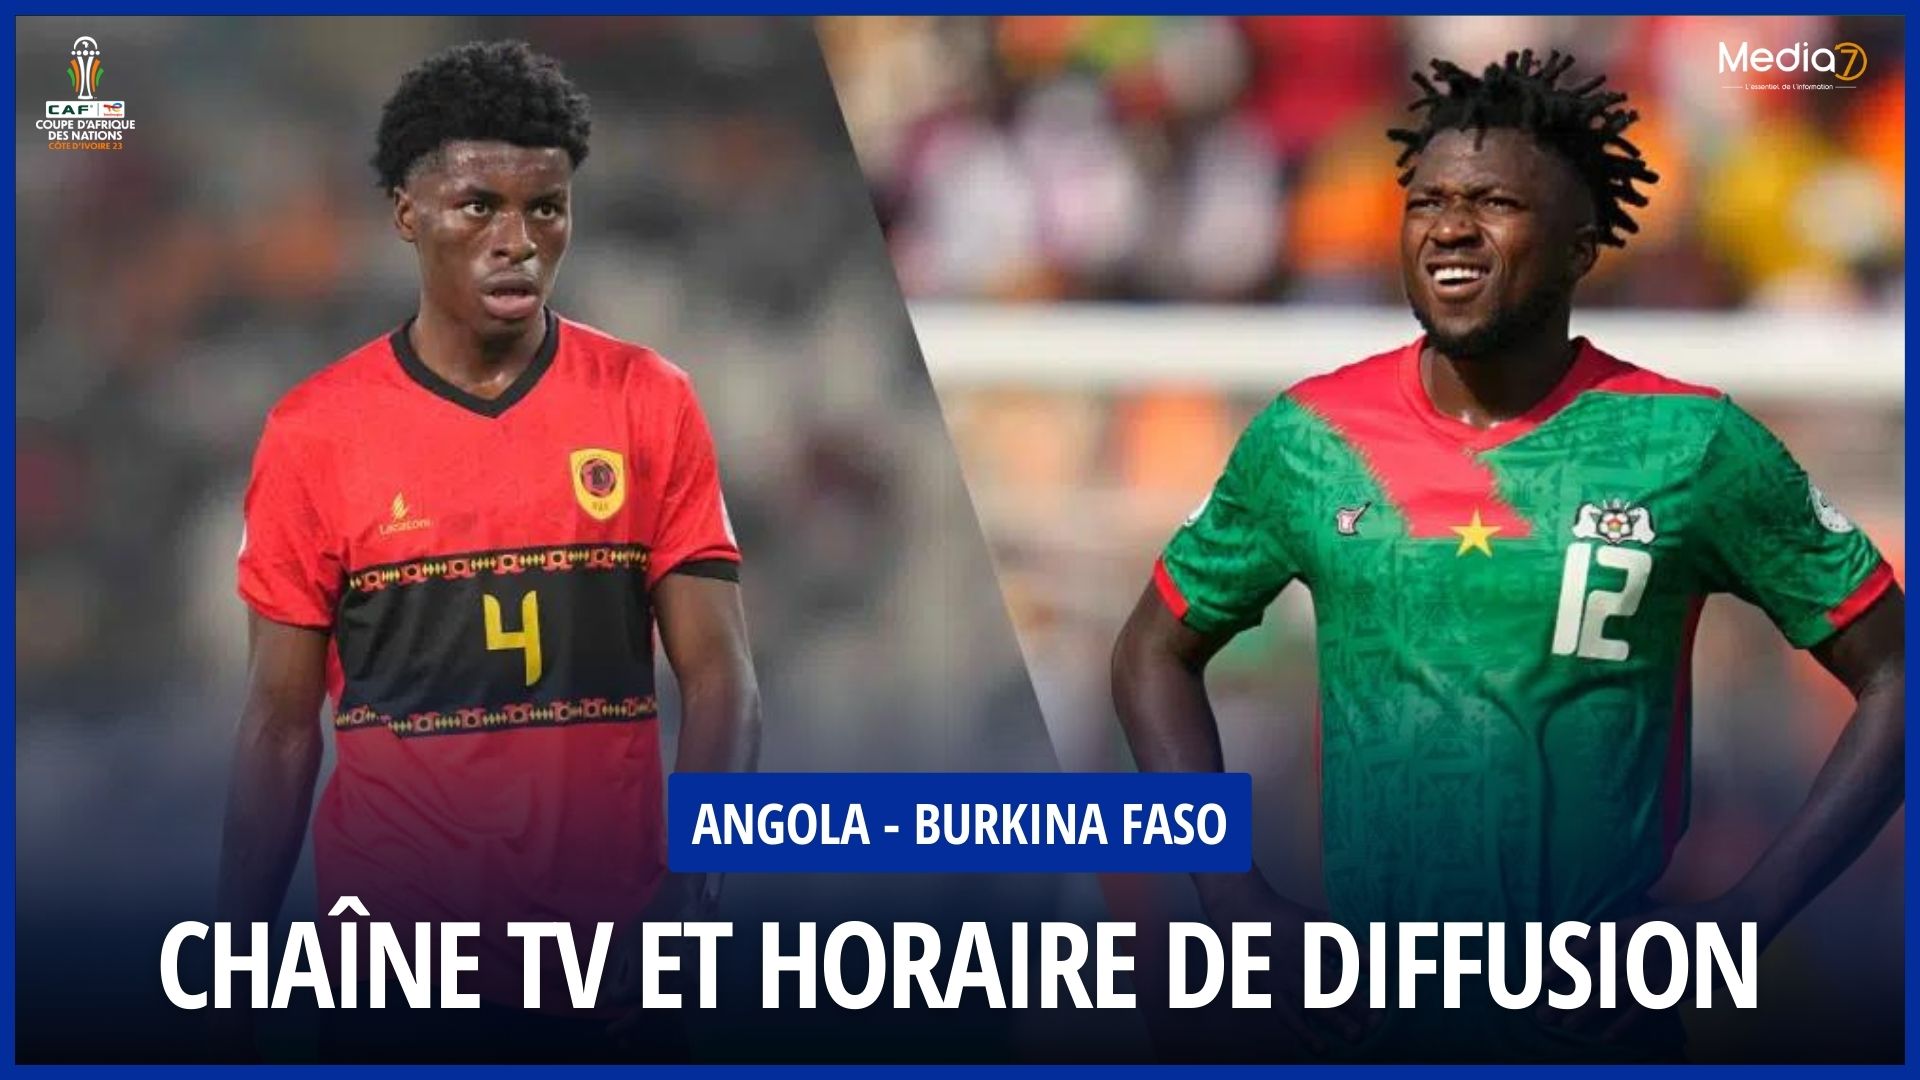 Angola - Burkina Faso match live: TV channel and broadcast time - Media7